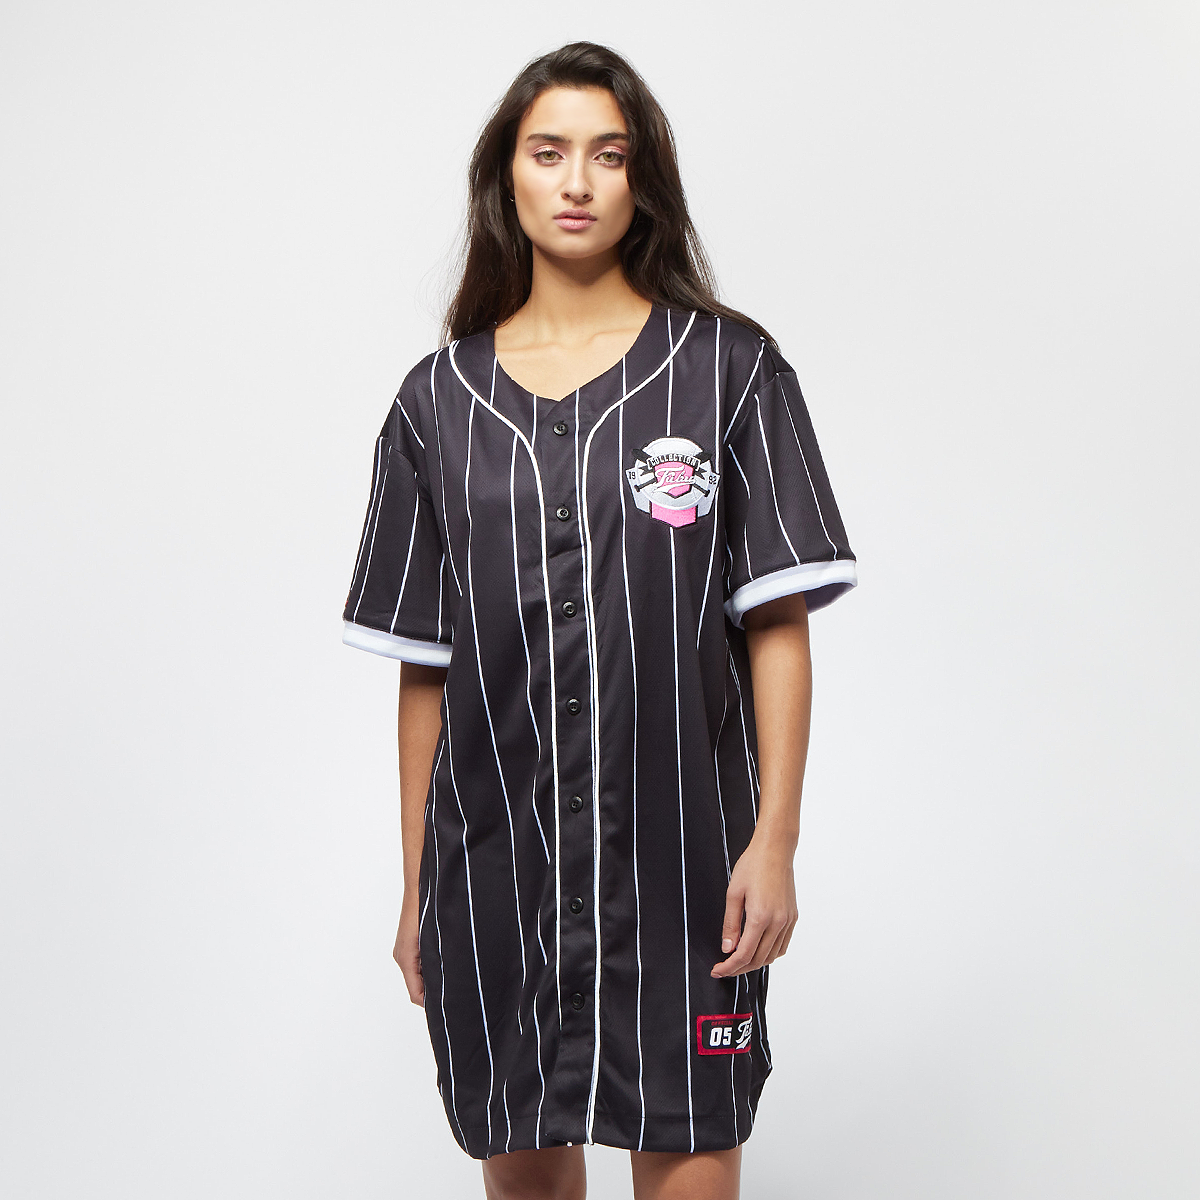 Productafbeelding: Varsity Patch Pinstripe Baseball Dress